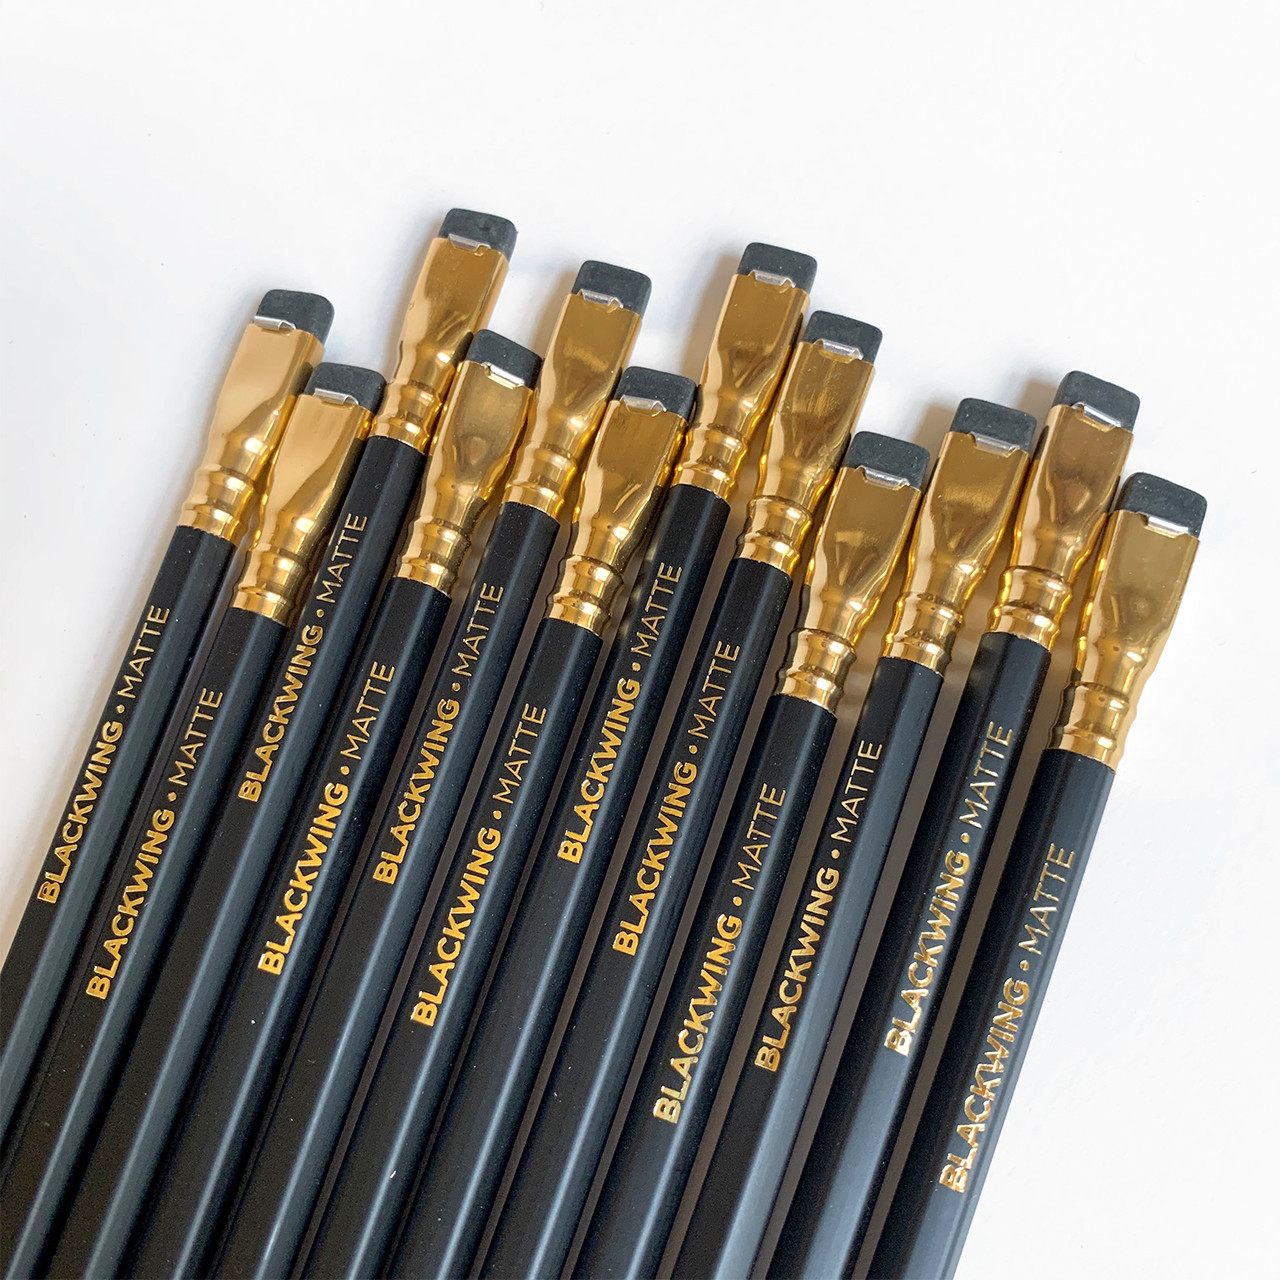 Blackwing Matte Pencils – HAMMERPRESS